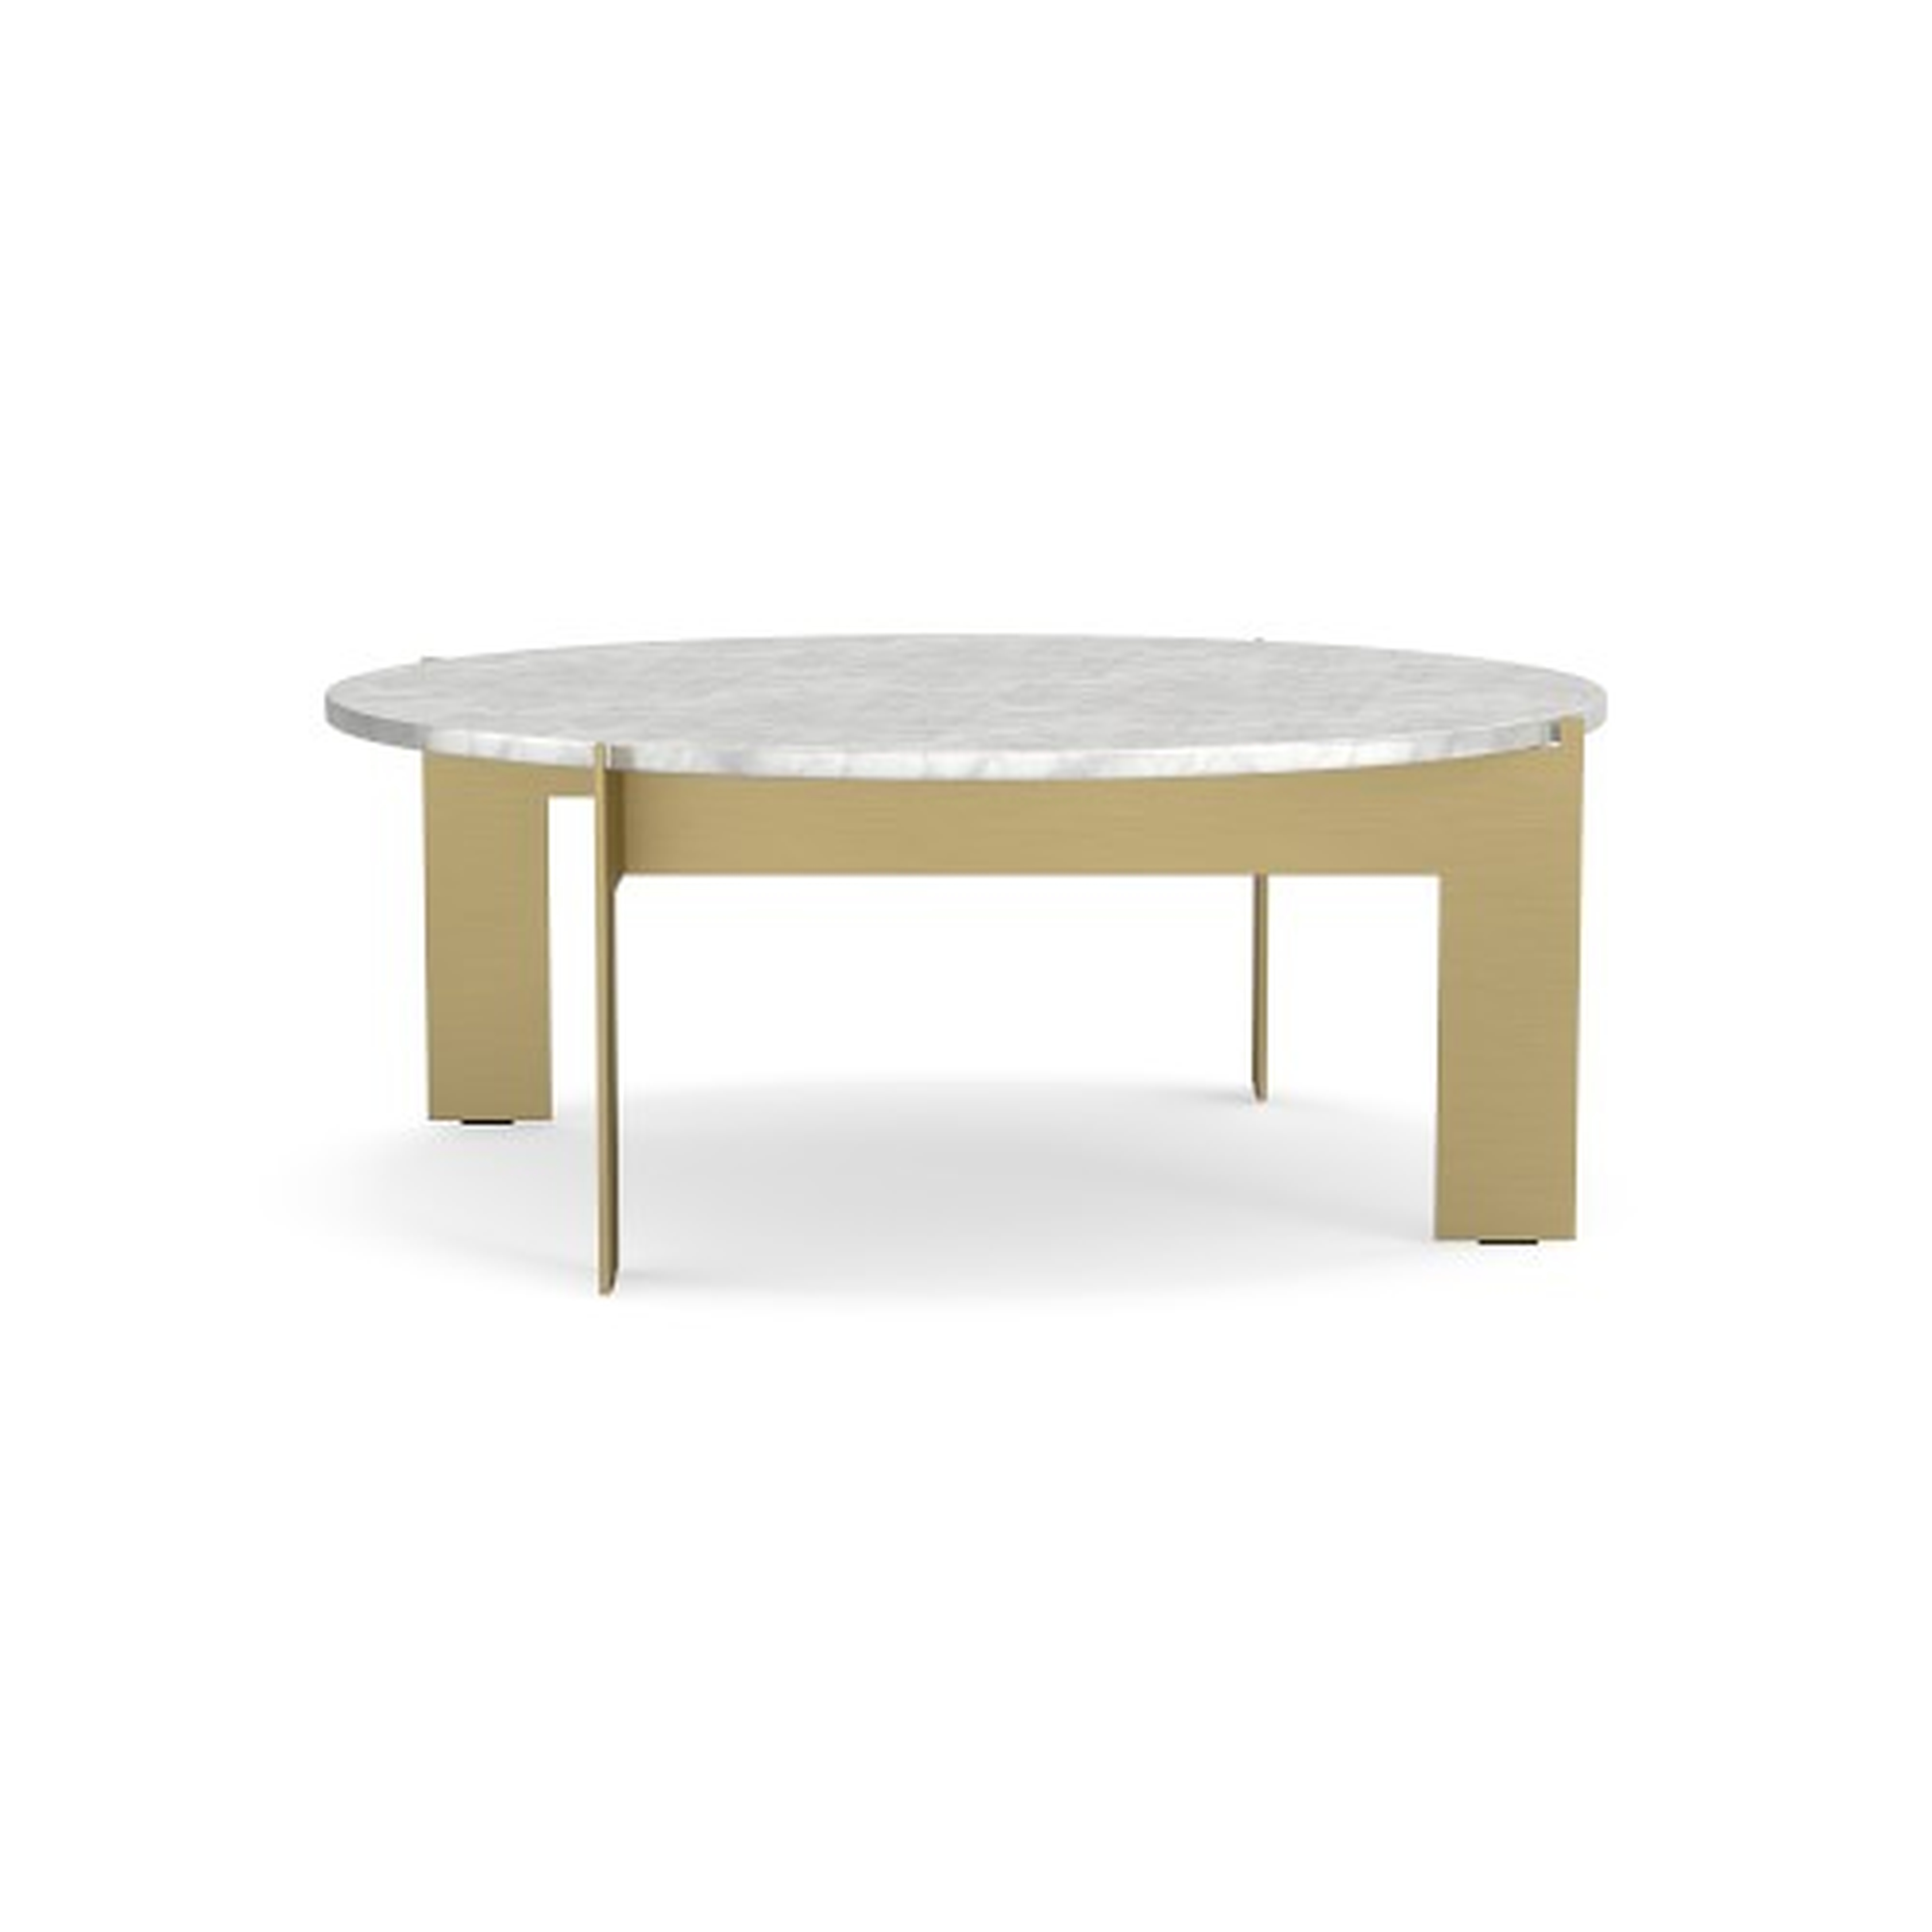 Danish Round Coffee Table, White Marble, Antique Brass - Williams Sonoma